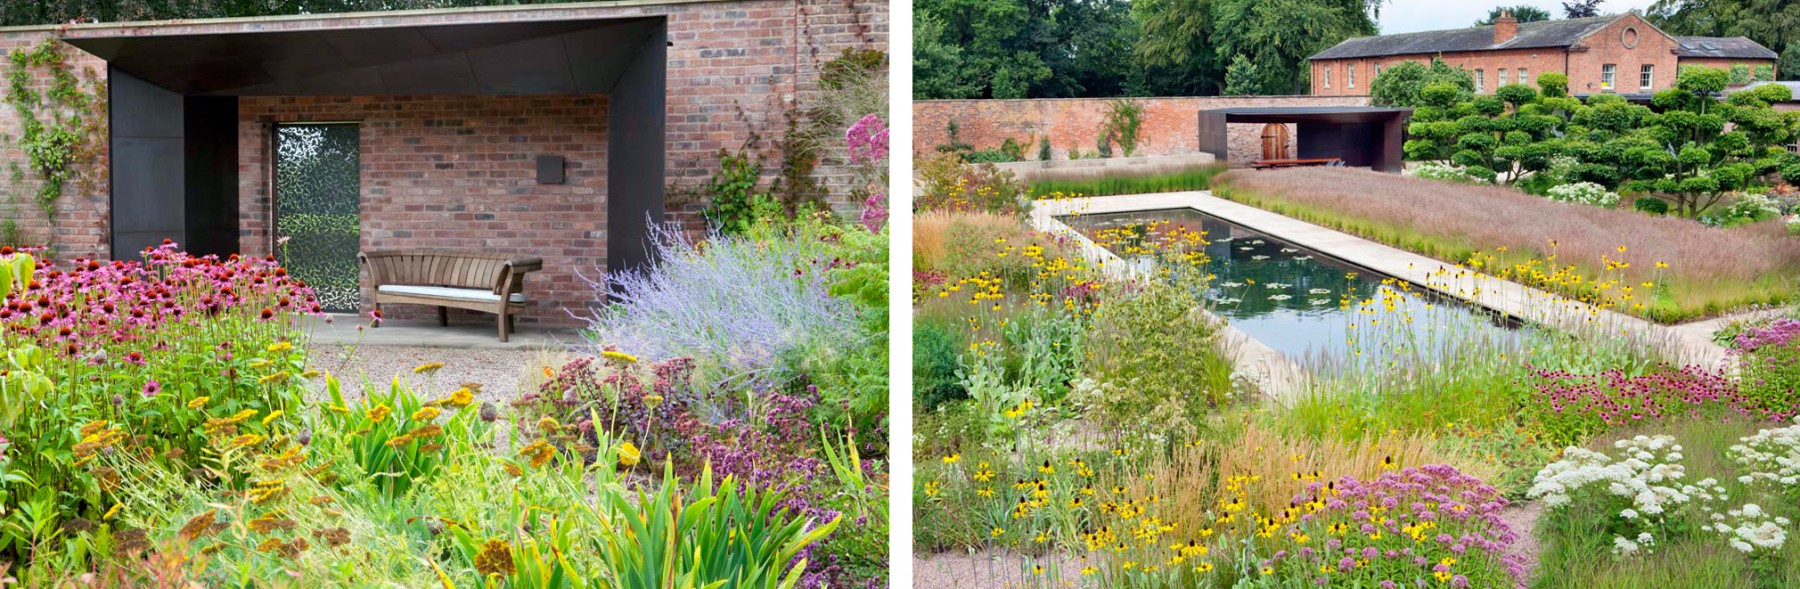 Garden-Grange-Pavilion-landscape-cheshire-cogshall-bronze-copper-room-gate-Tom-Stuart-smith-Jamie-Fobert-Architects-2